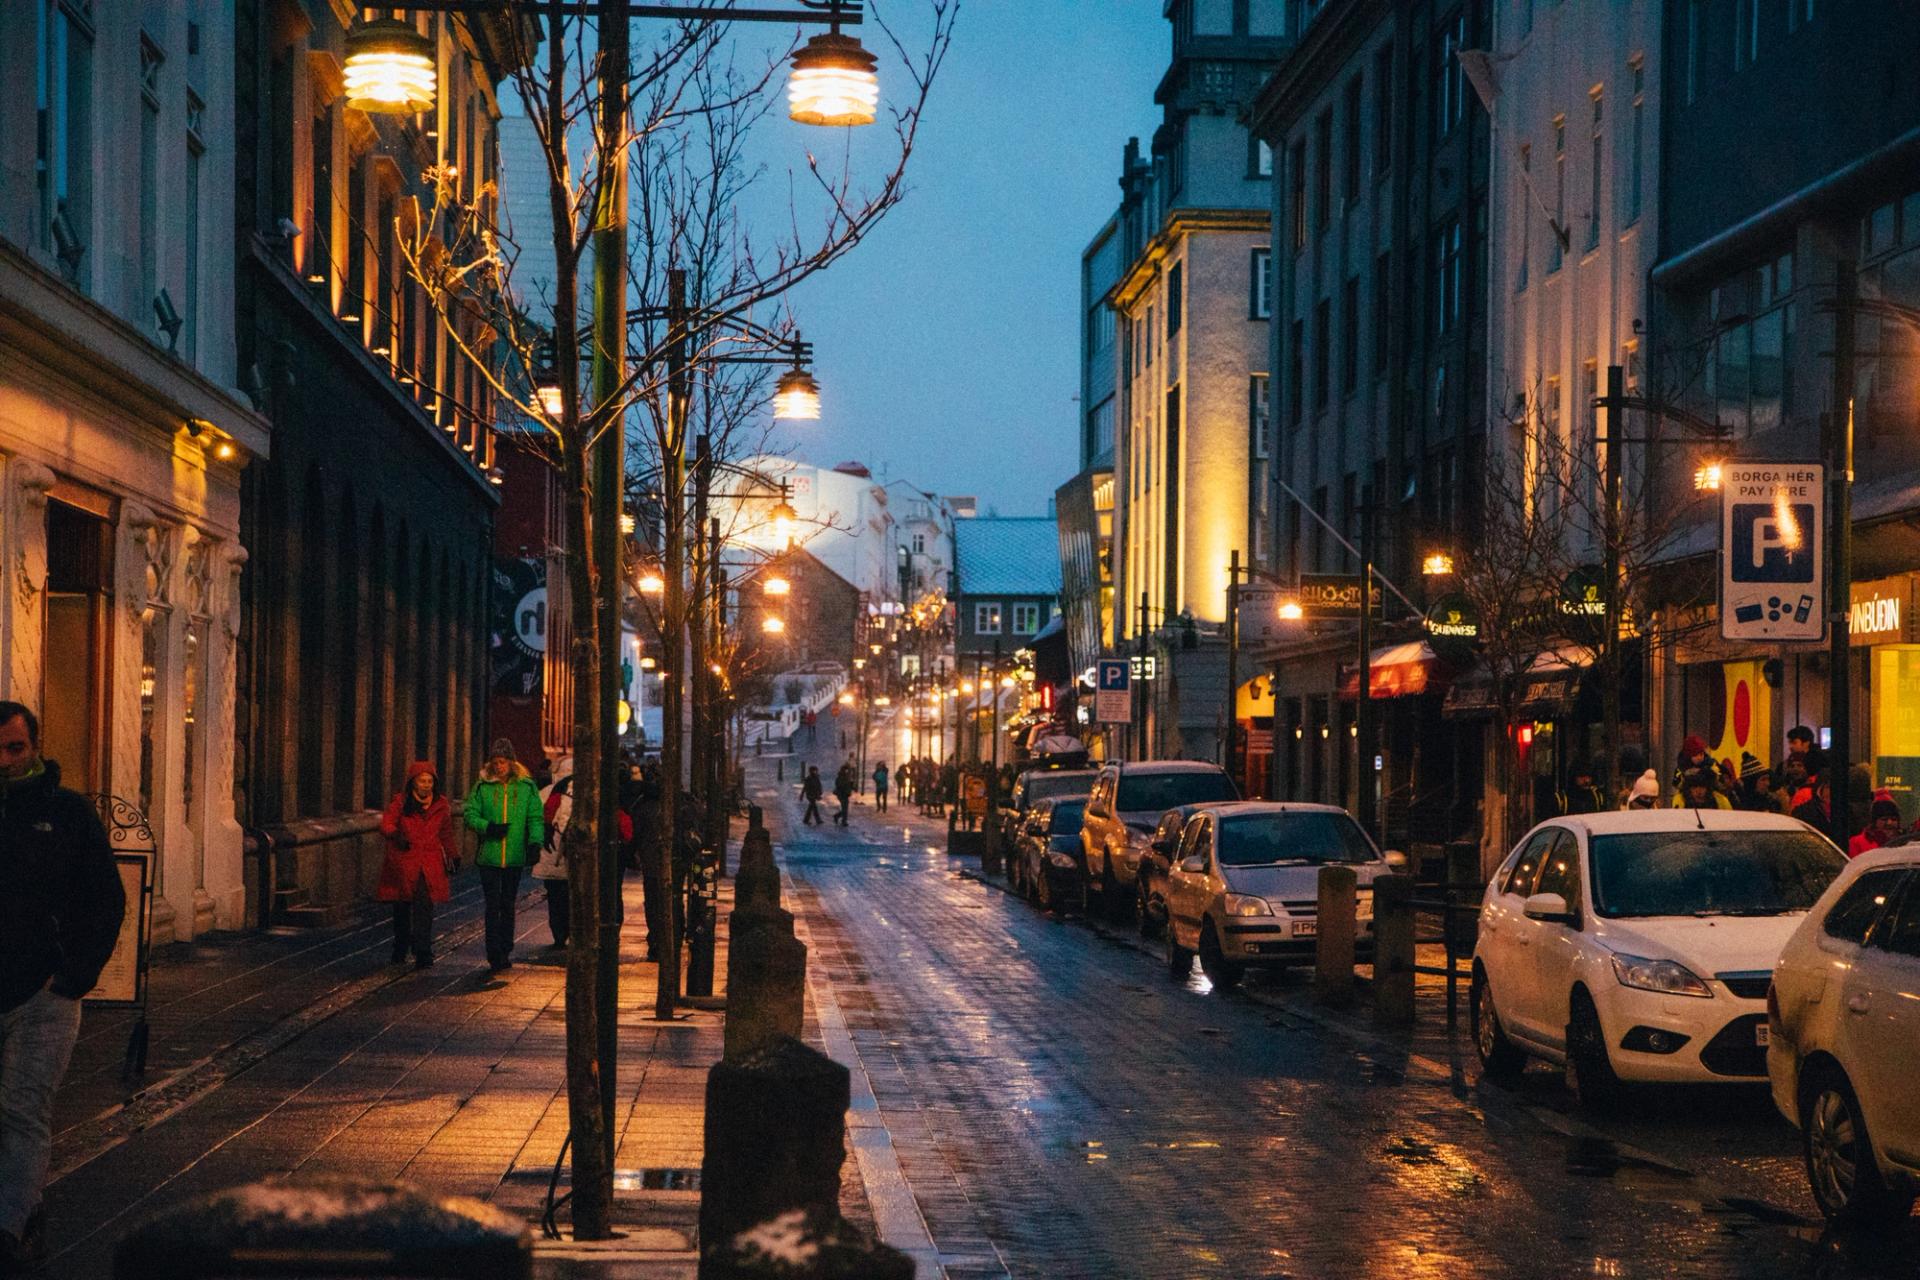 The capital Reykjavik by night